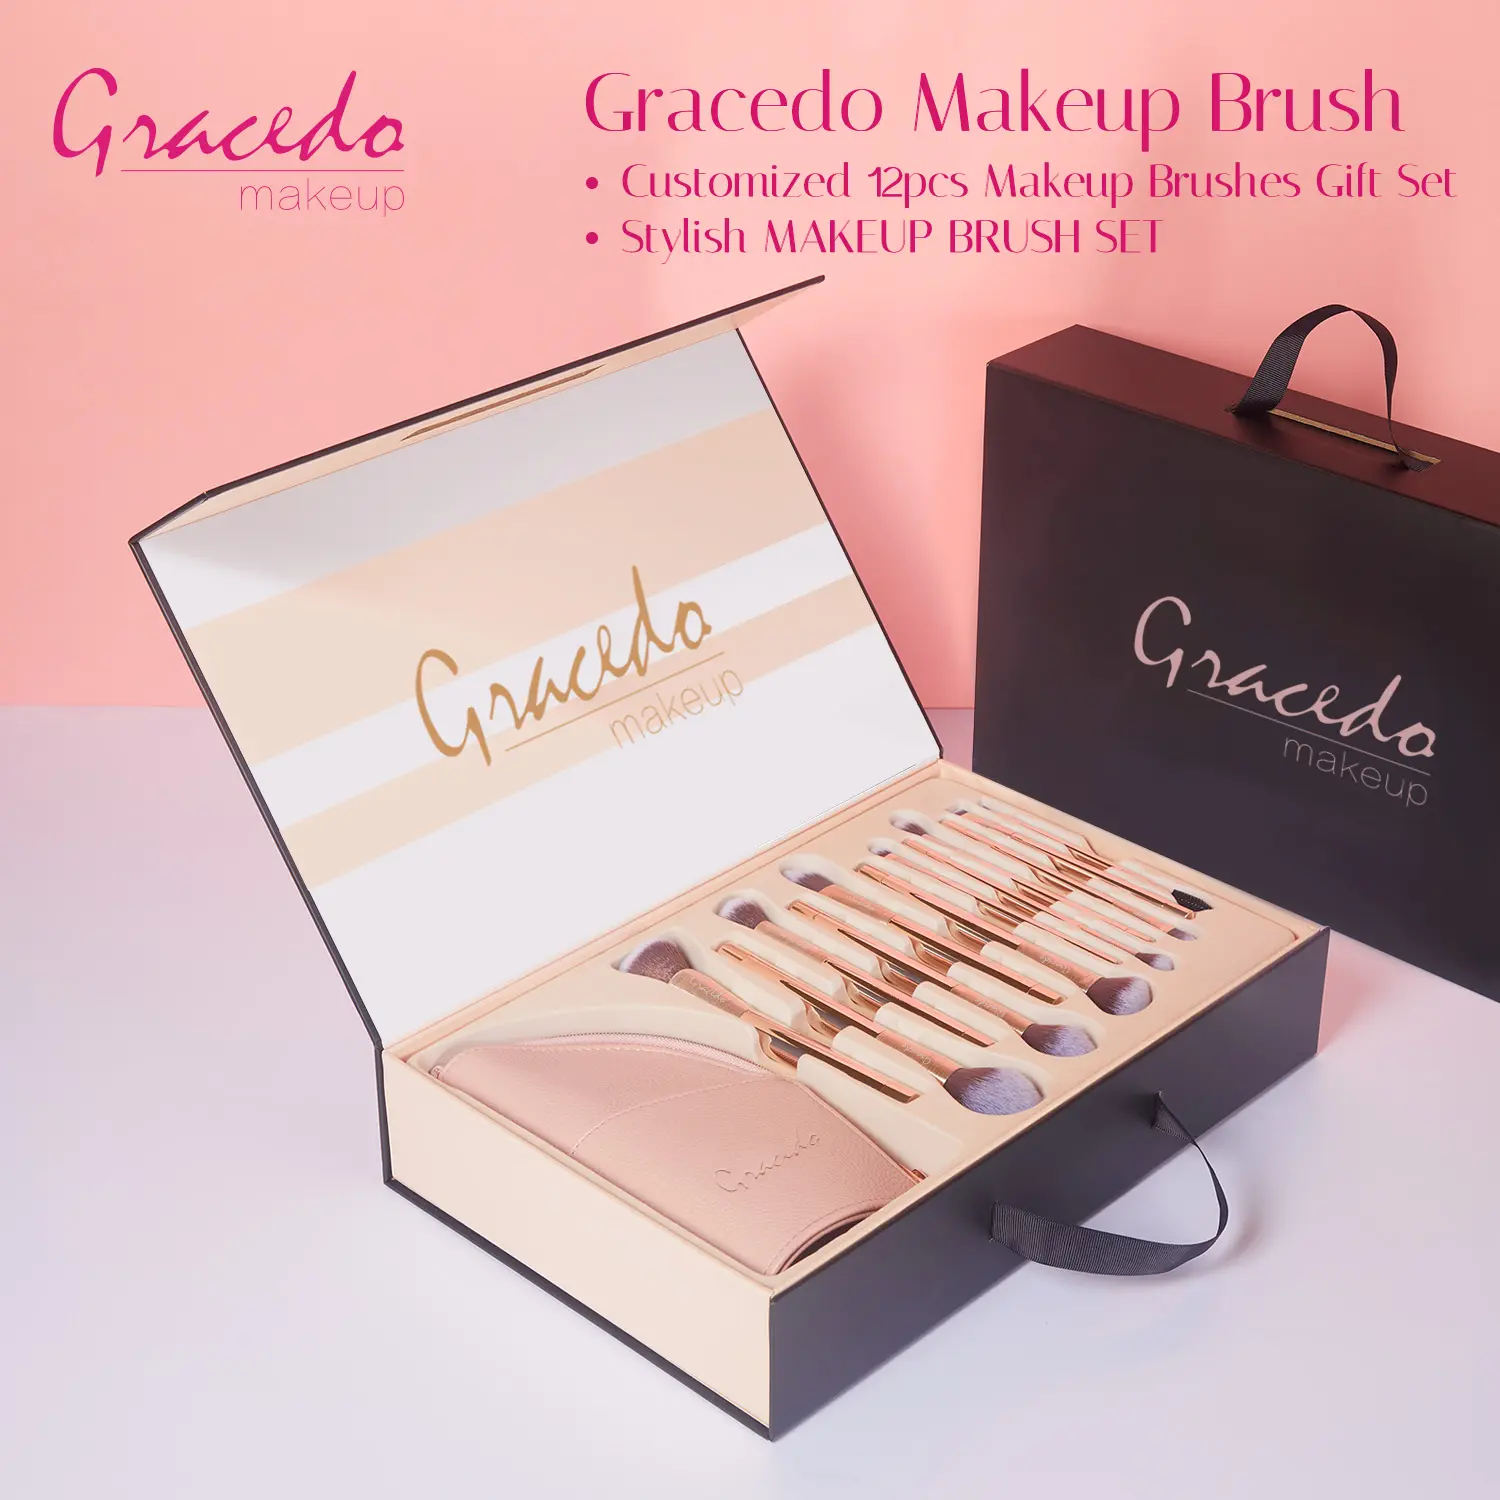 GRACEDO 12pcs gold luxury brush set makeup eyeshadow professional high quality makeup brush set with zipper bag and gift box